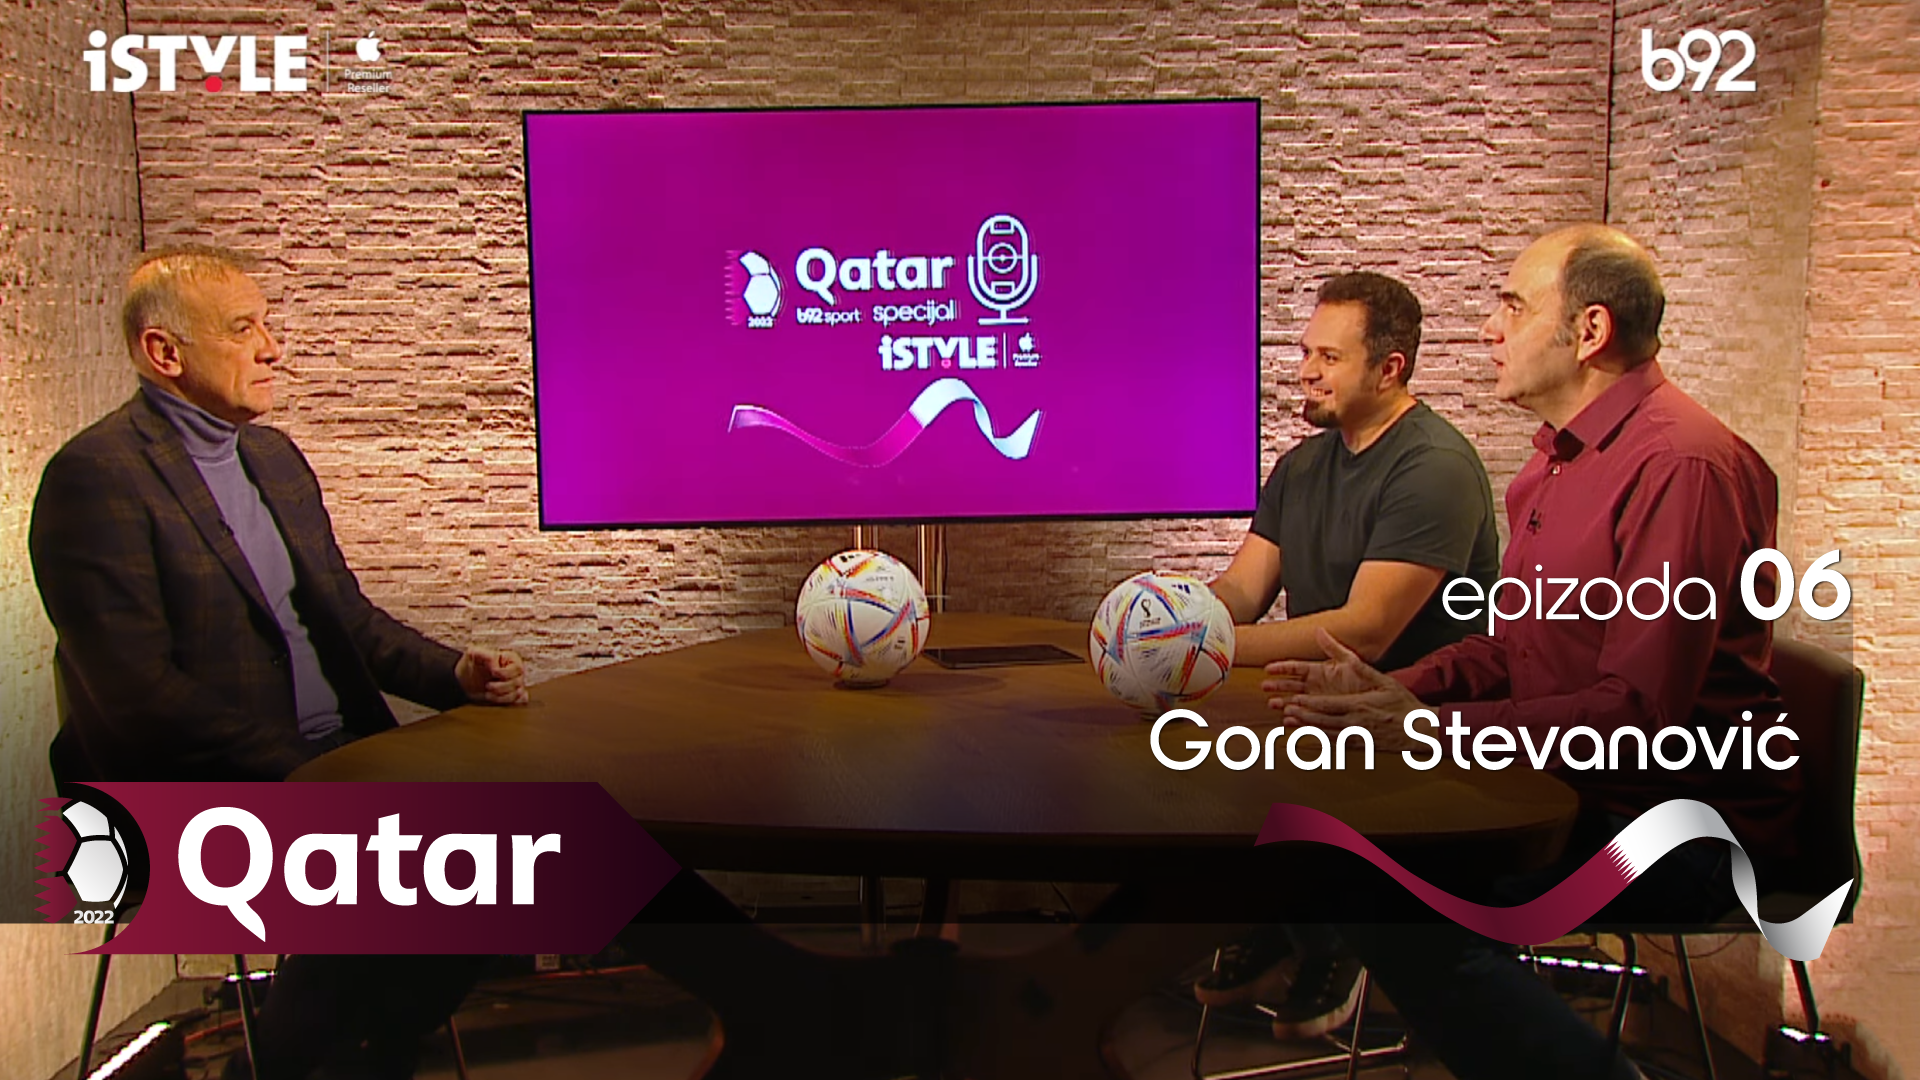 Qatar special 6: Ko je najbolji na svetu?